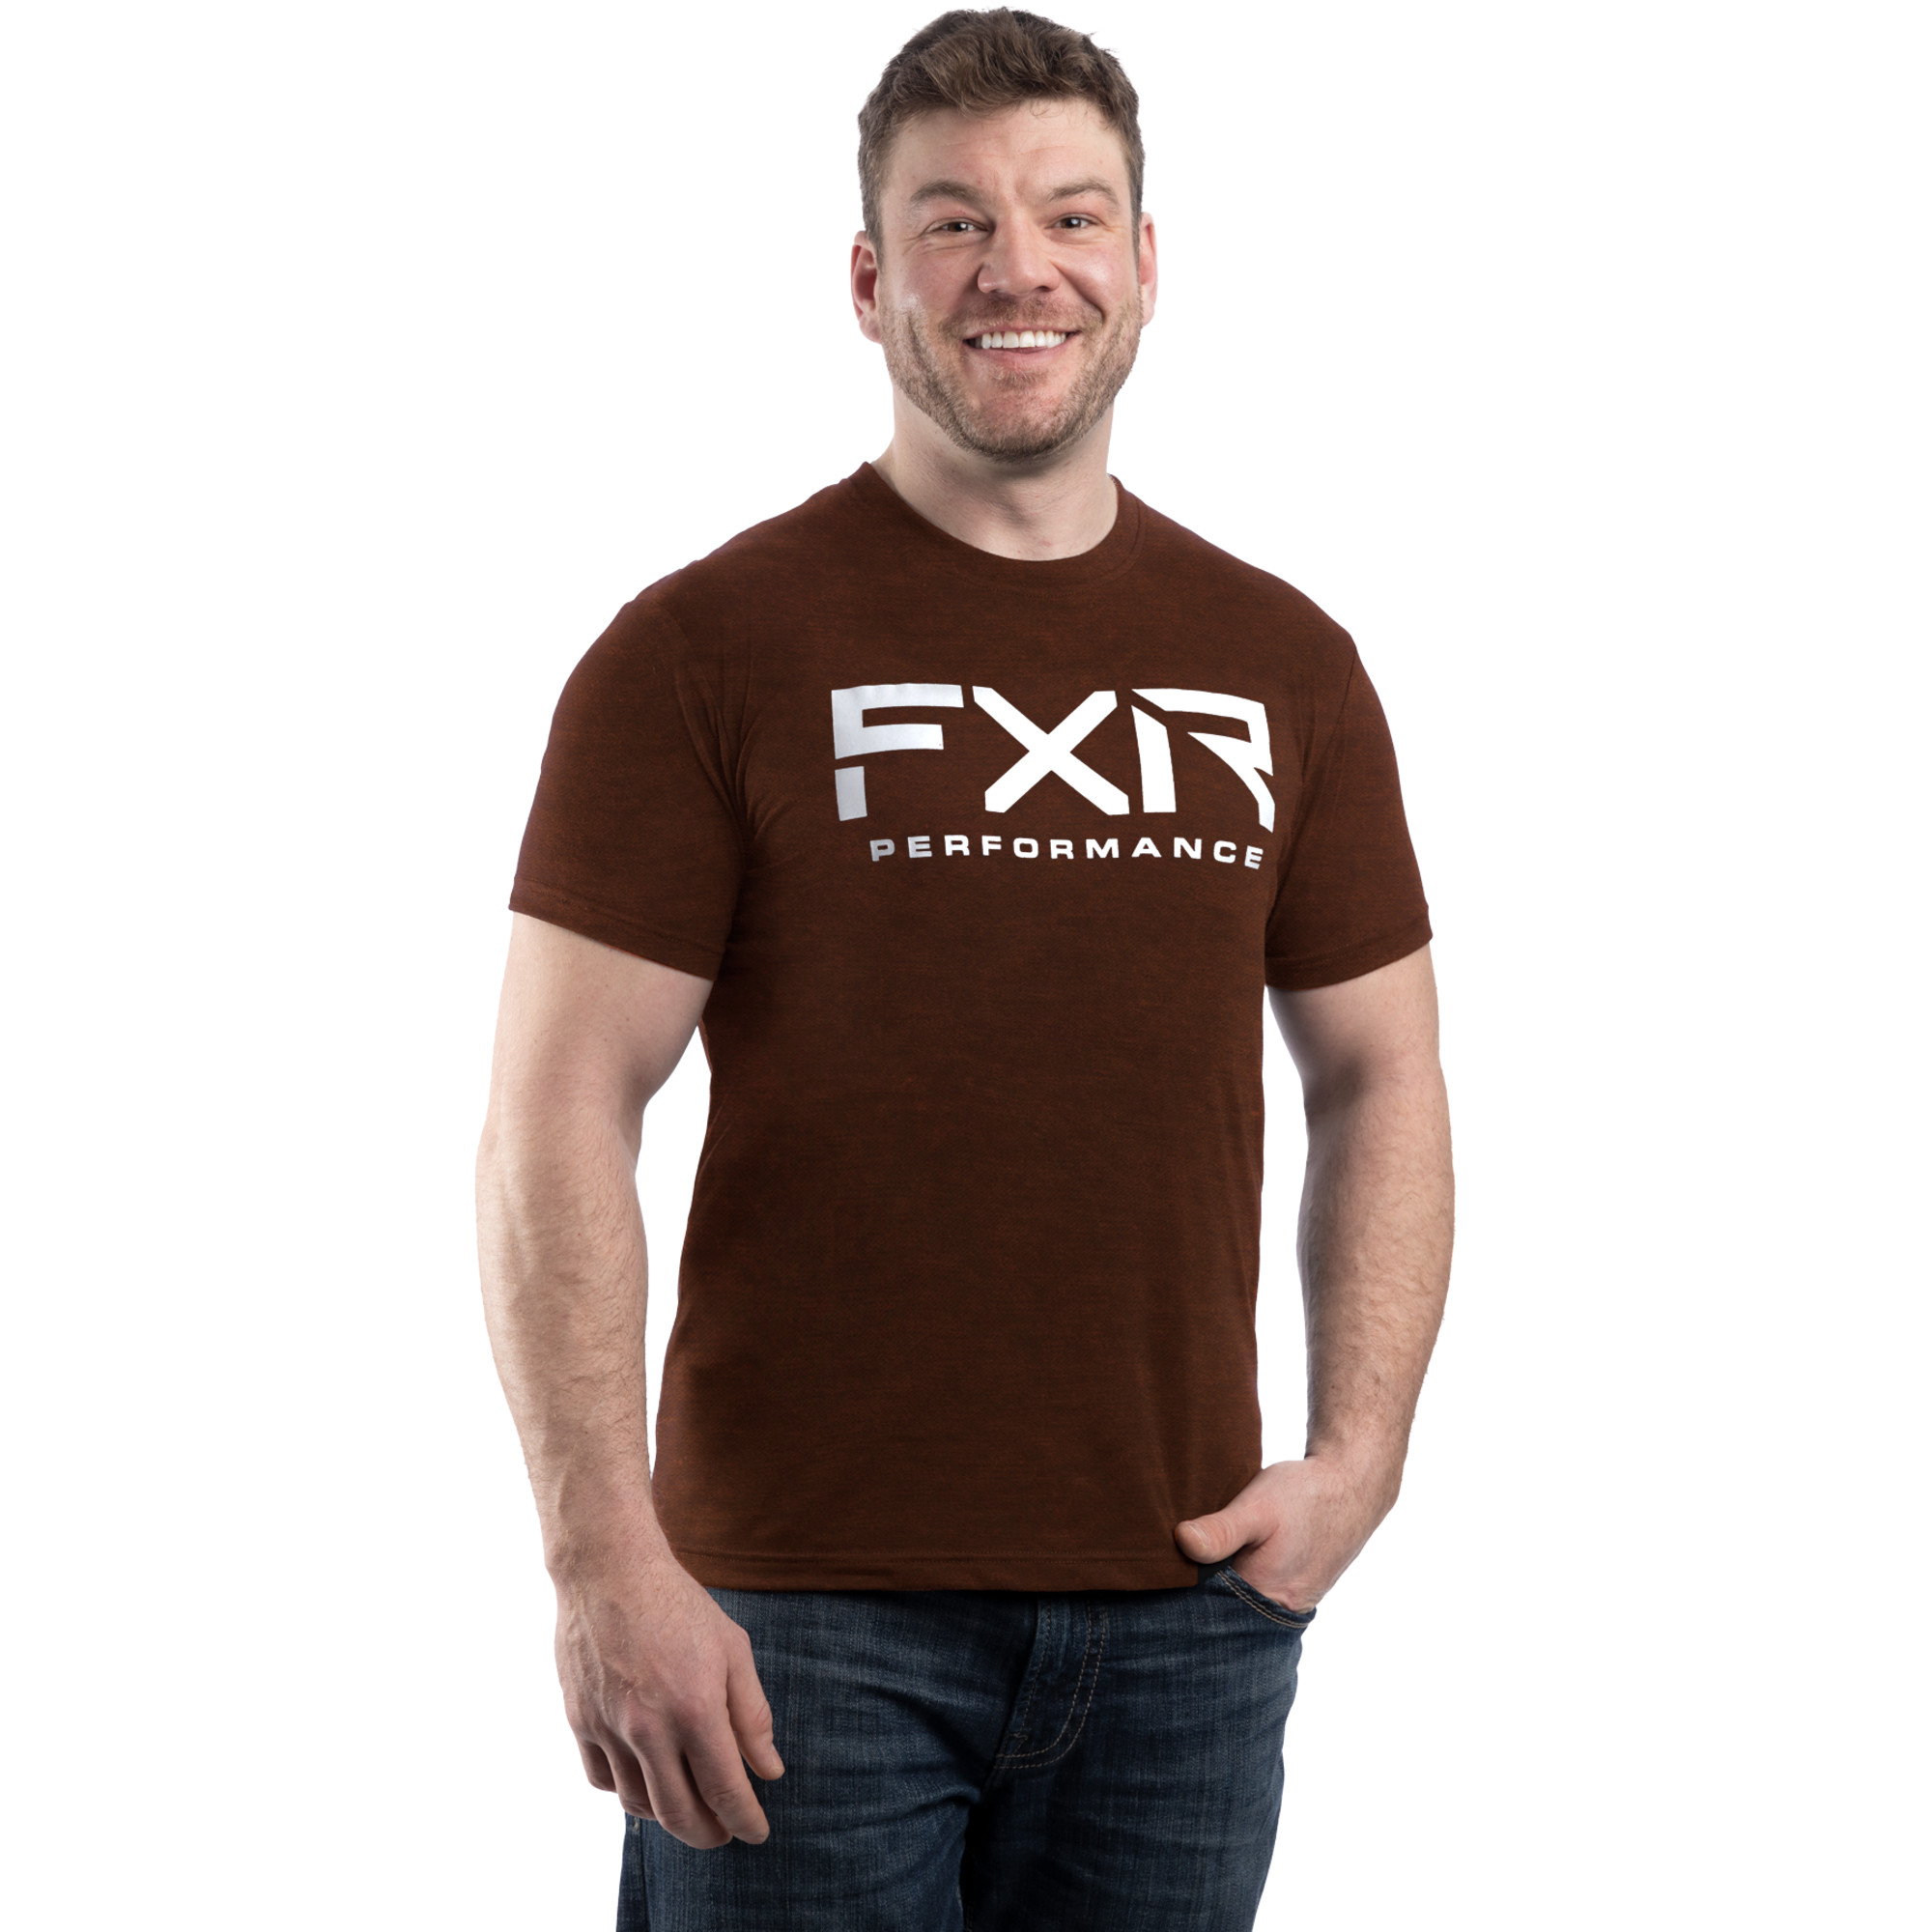 fxr racing t-shirt shirts for men performance